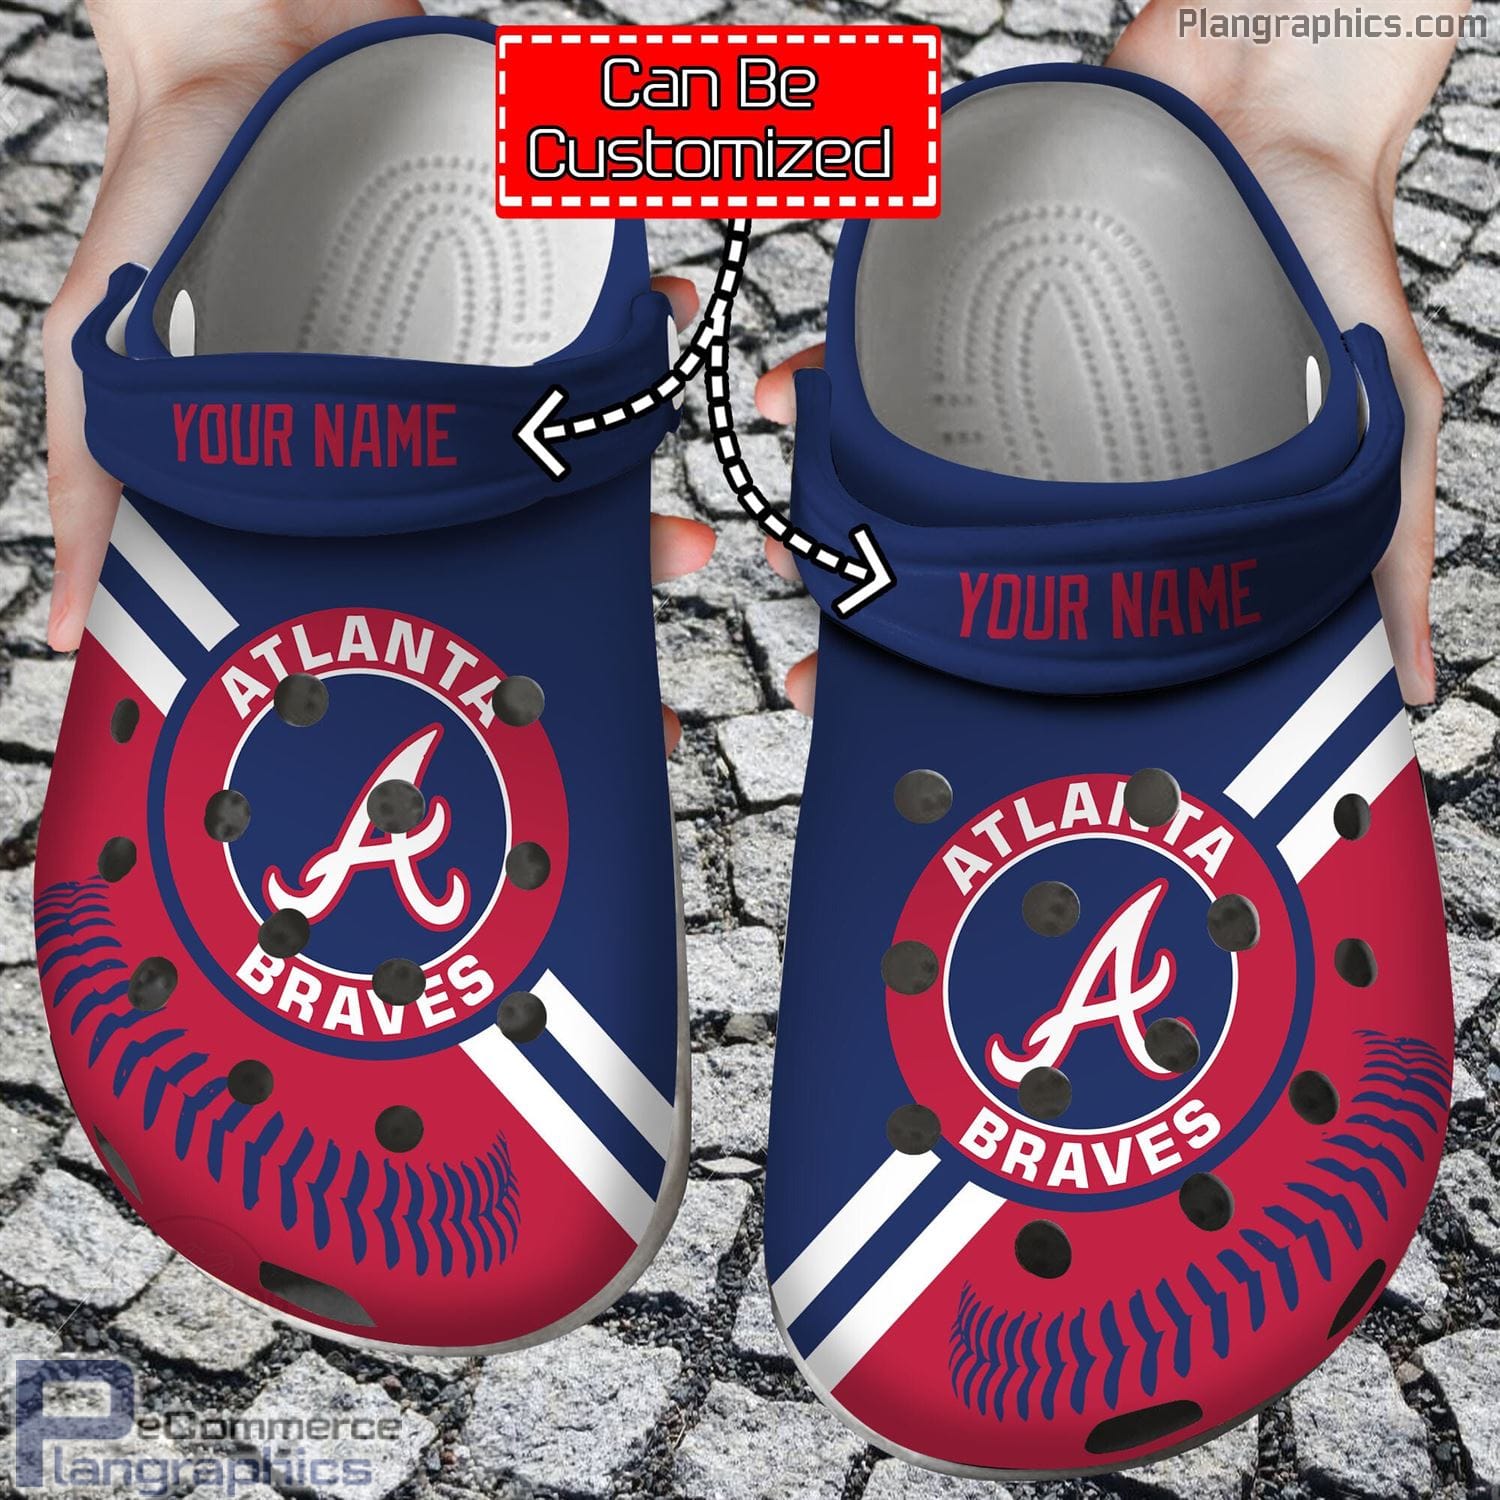 Personalized Name Baseball Atlanta Braves Crocs Clog Shoes - Plangraphics